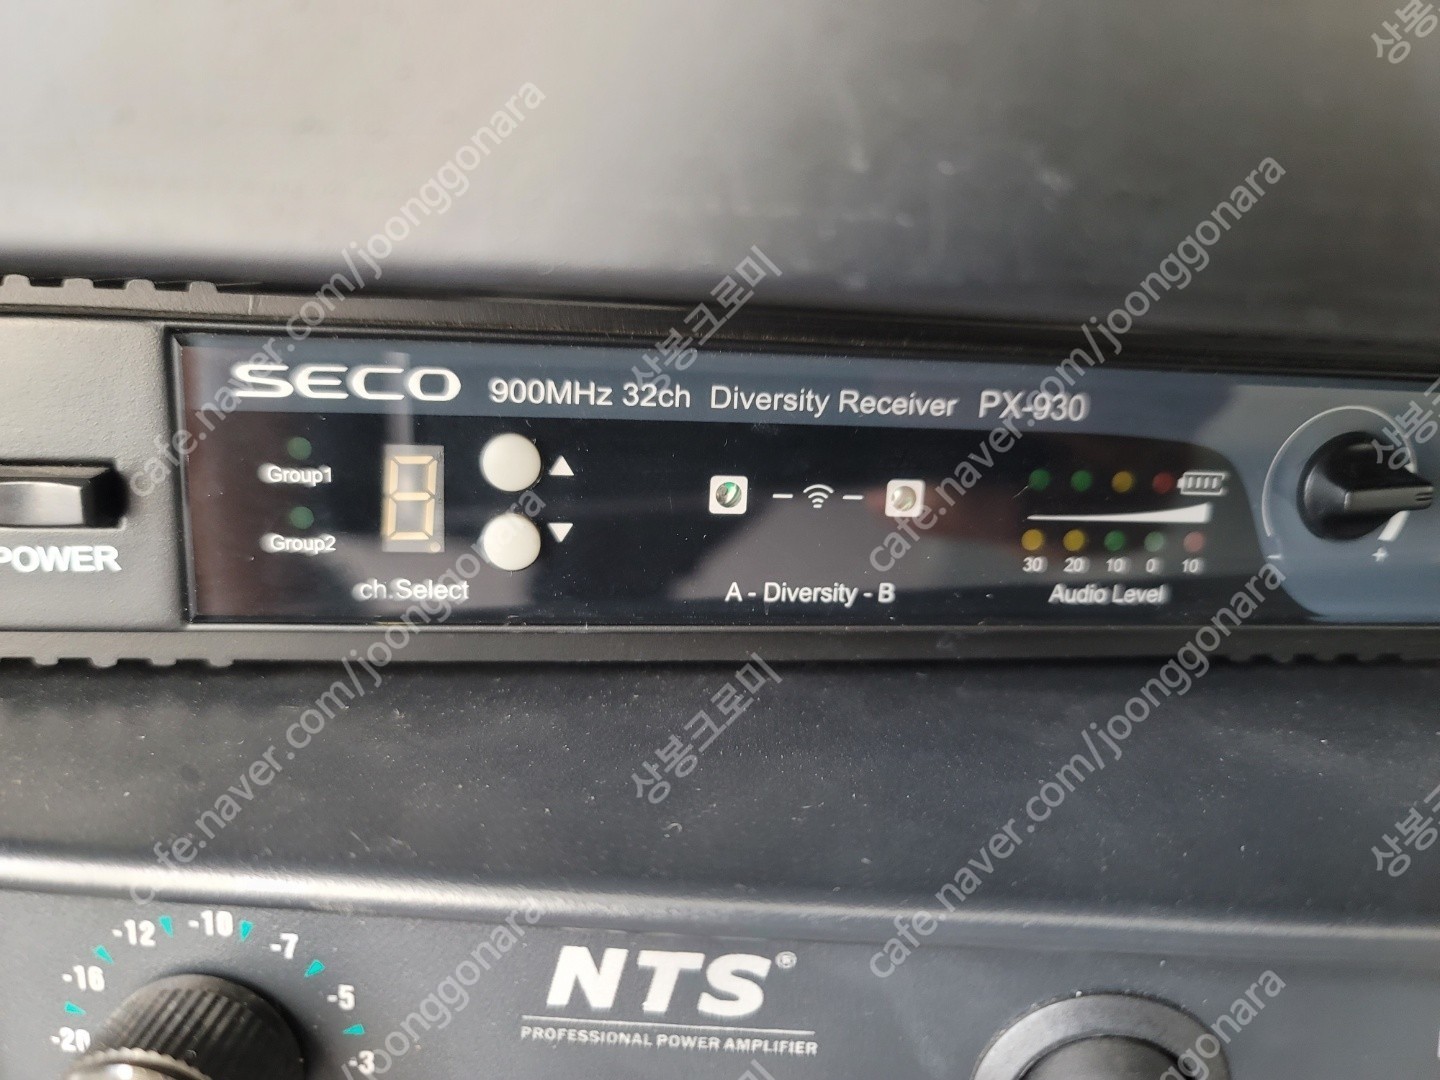 SECO PX-930 교회/회의실/강연용 1채널 무선마이크 시스템 본체 급처 판매합니다.(무선마이크 추가 가능)